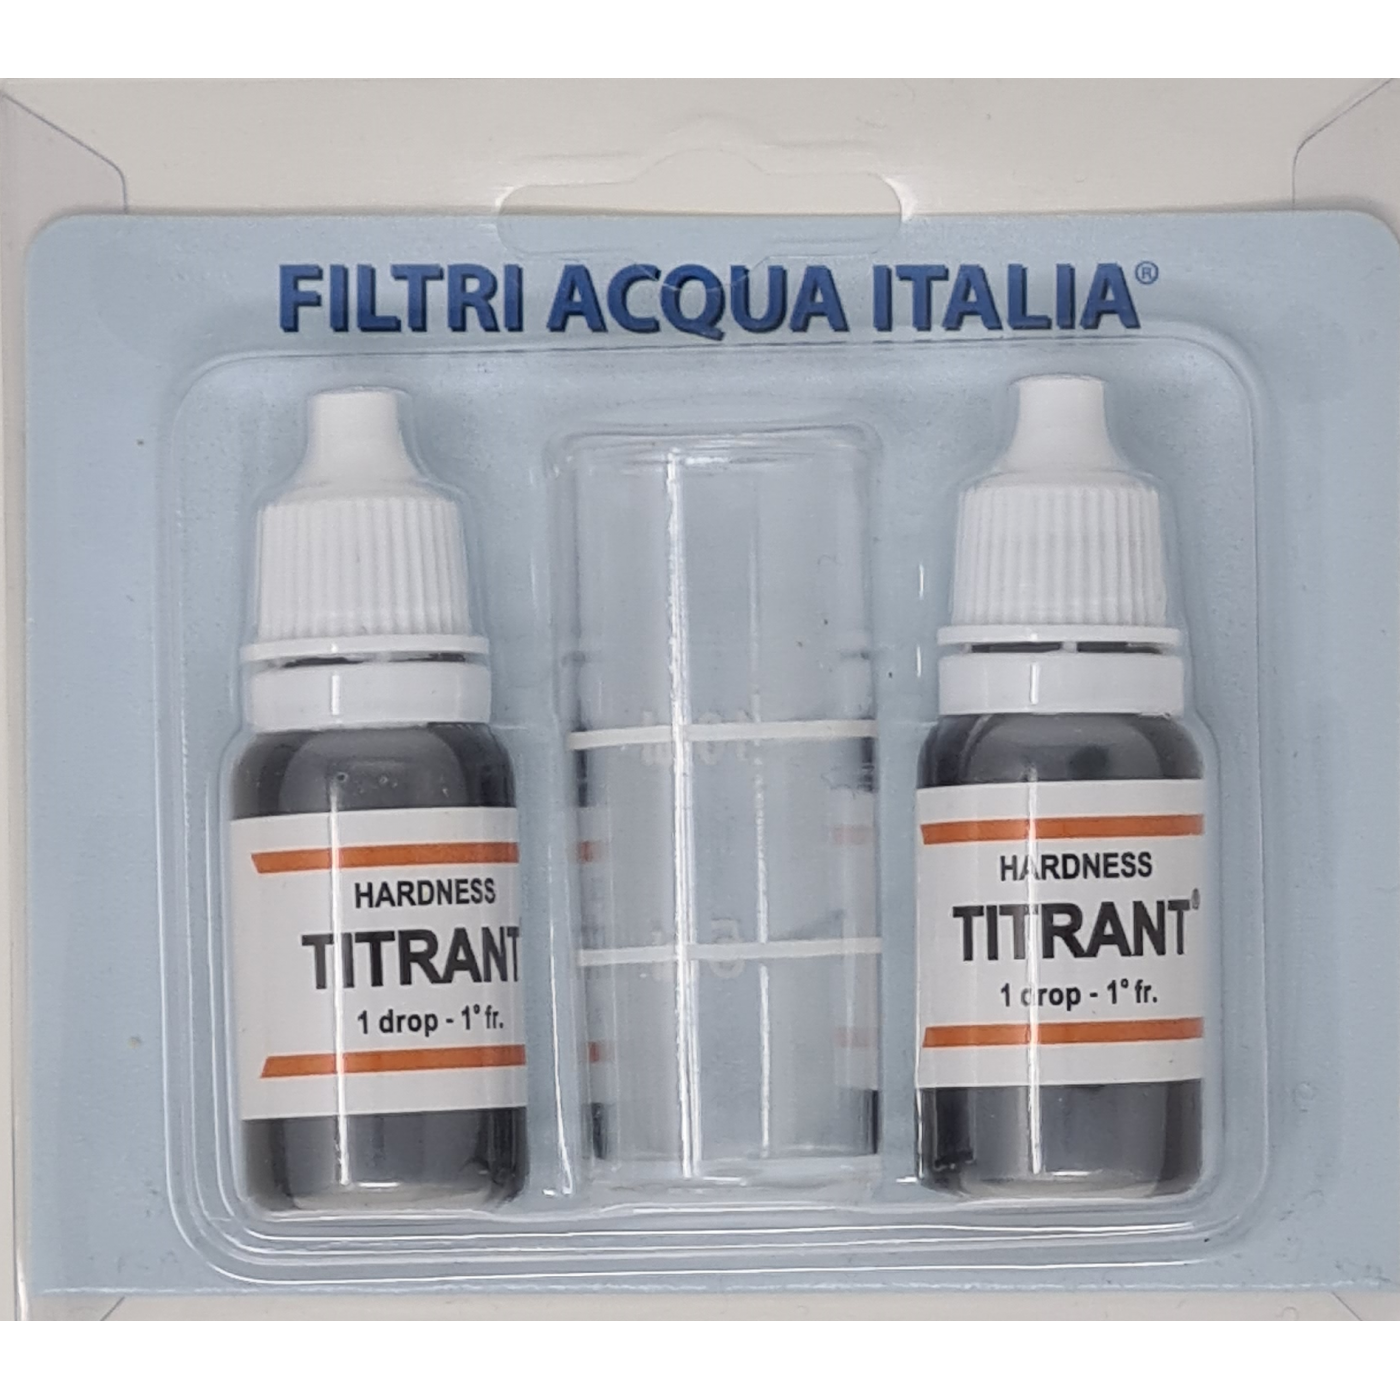 titrant analsi durezza acqua set 2 pezzi filtri acqua italia®